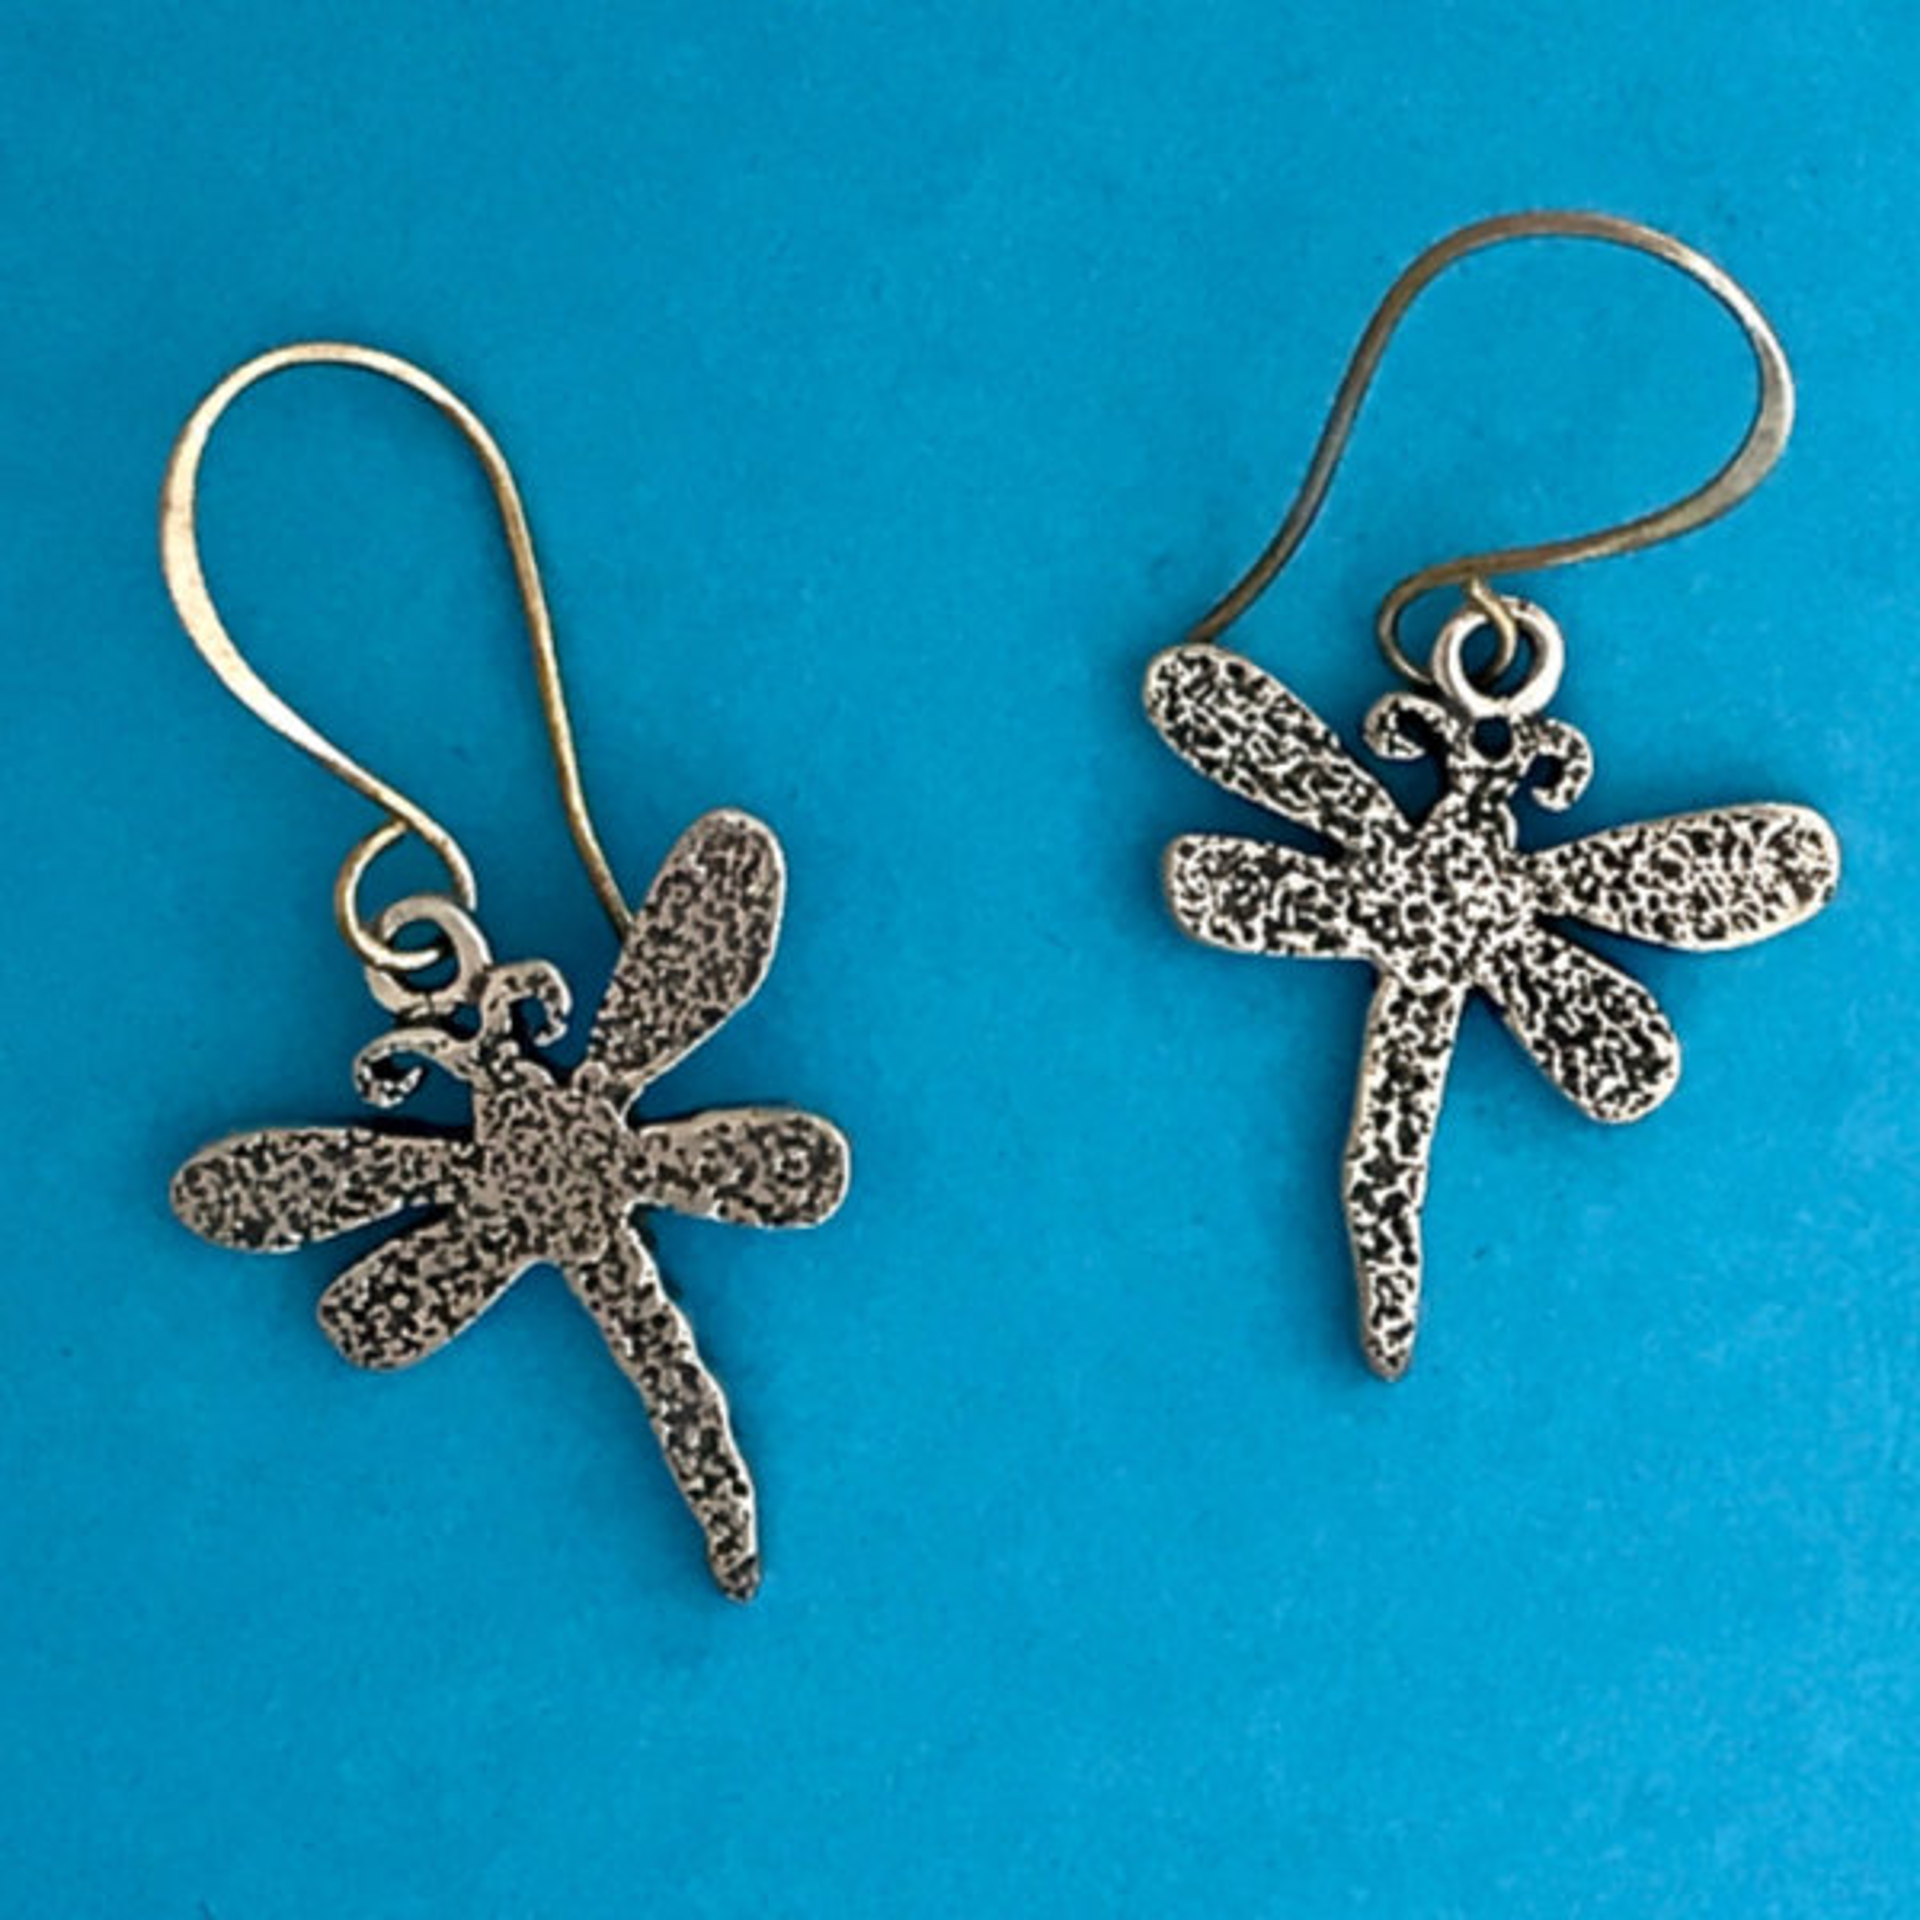 Samantha & Nina Joe dragonfly earrings by Melanie A. Yazzie